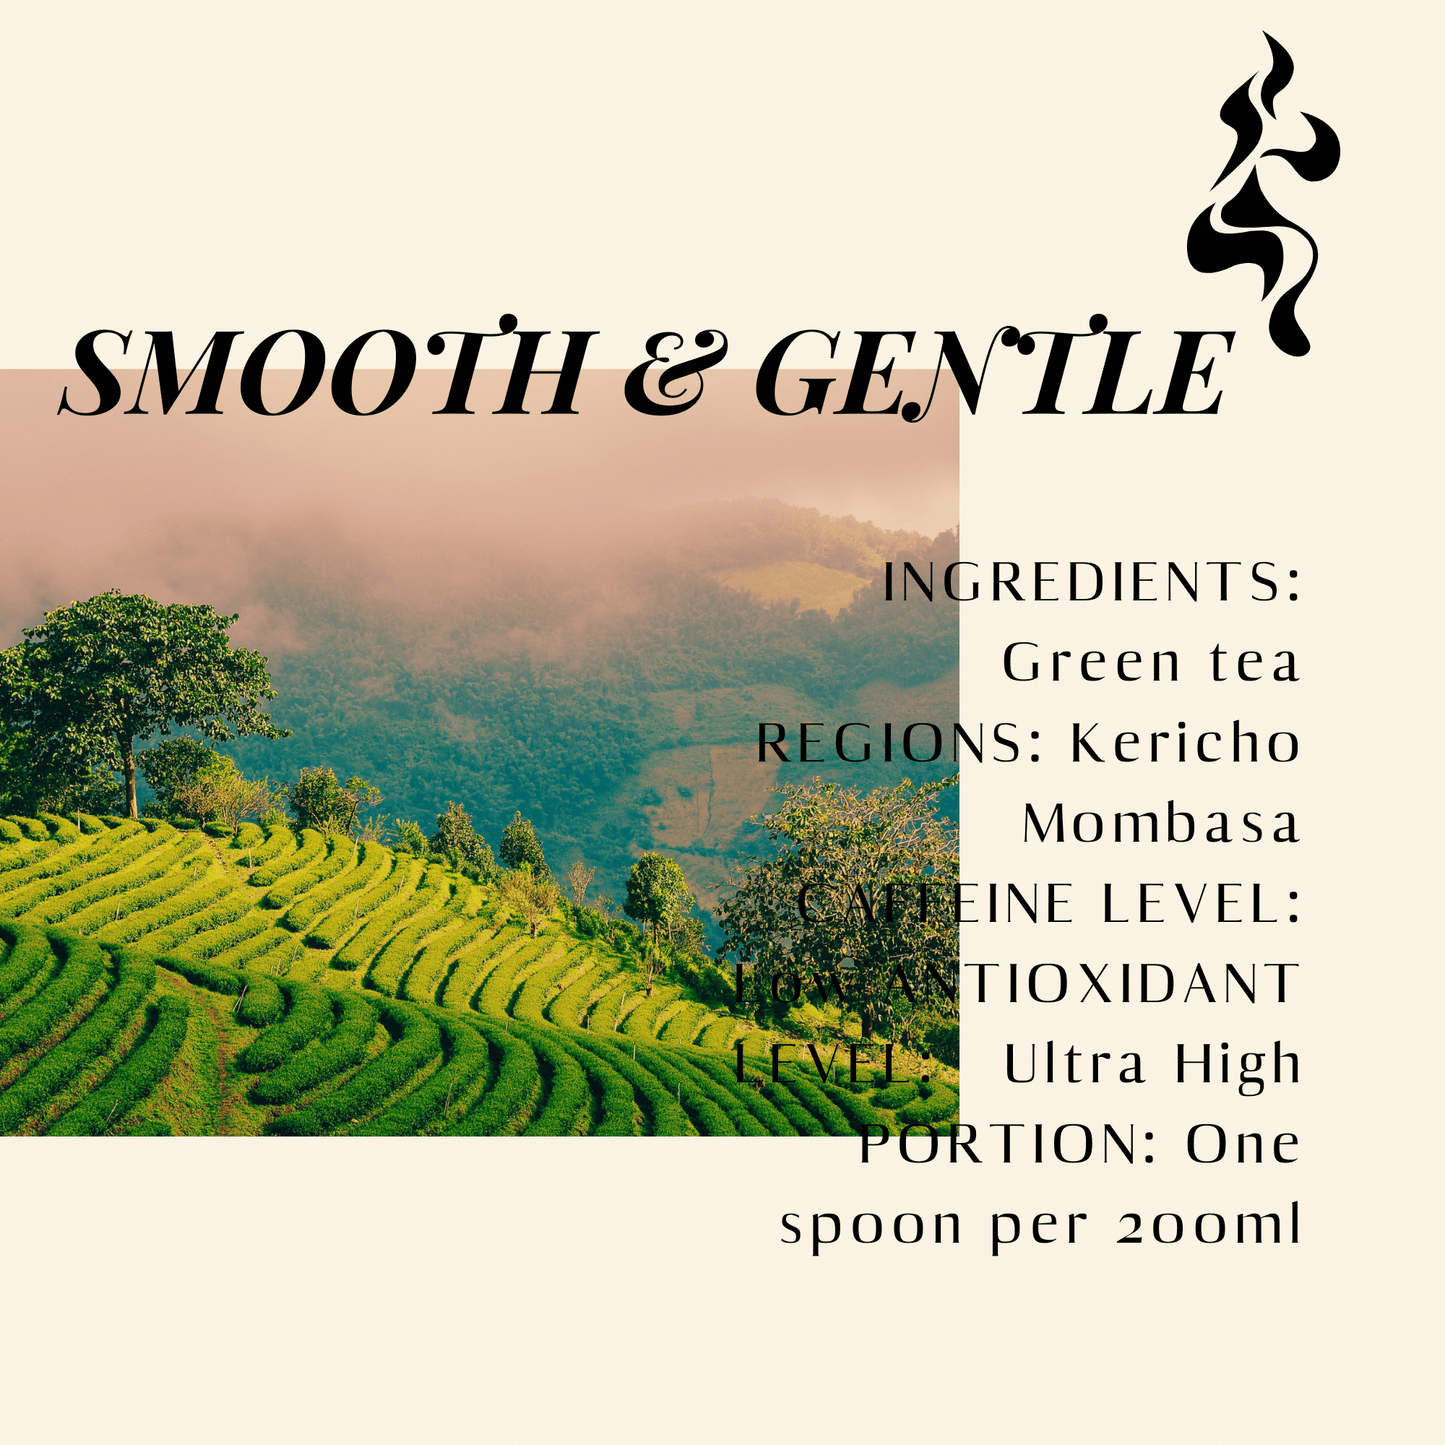 Smooth & Gentle. Sencha Green Tea. Details ->